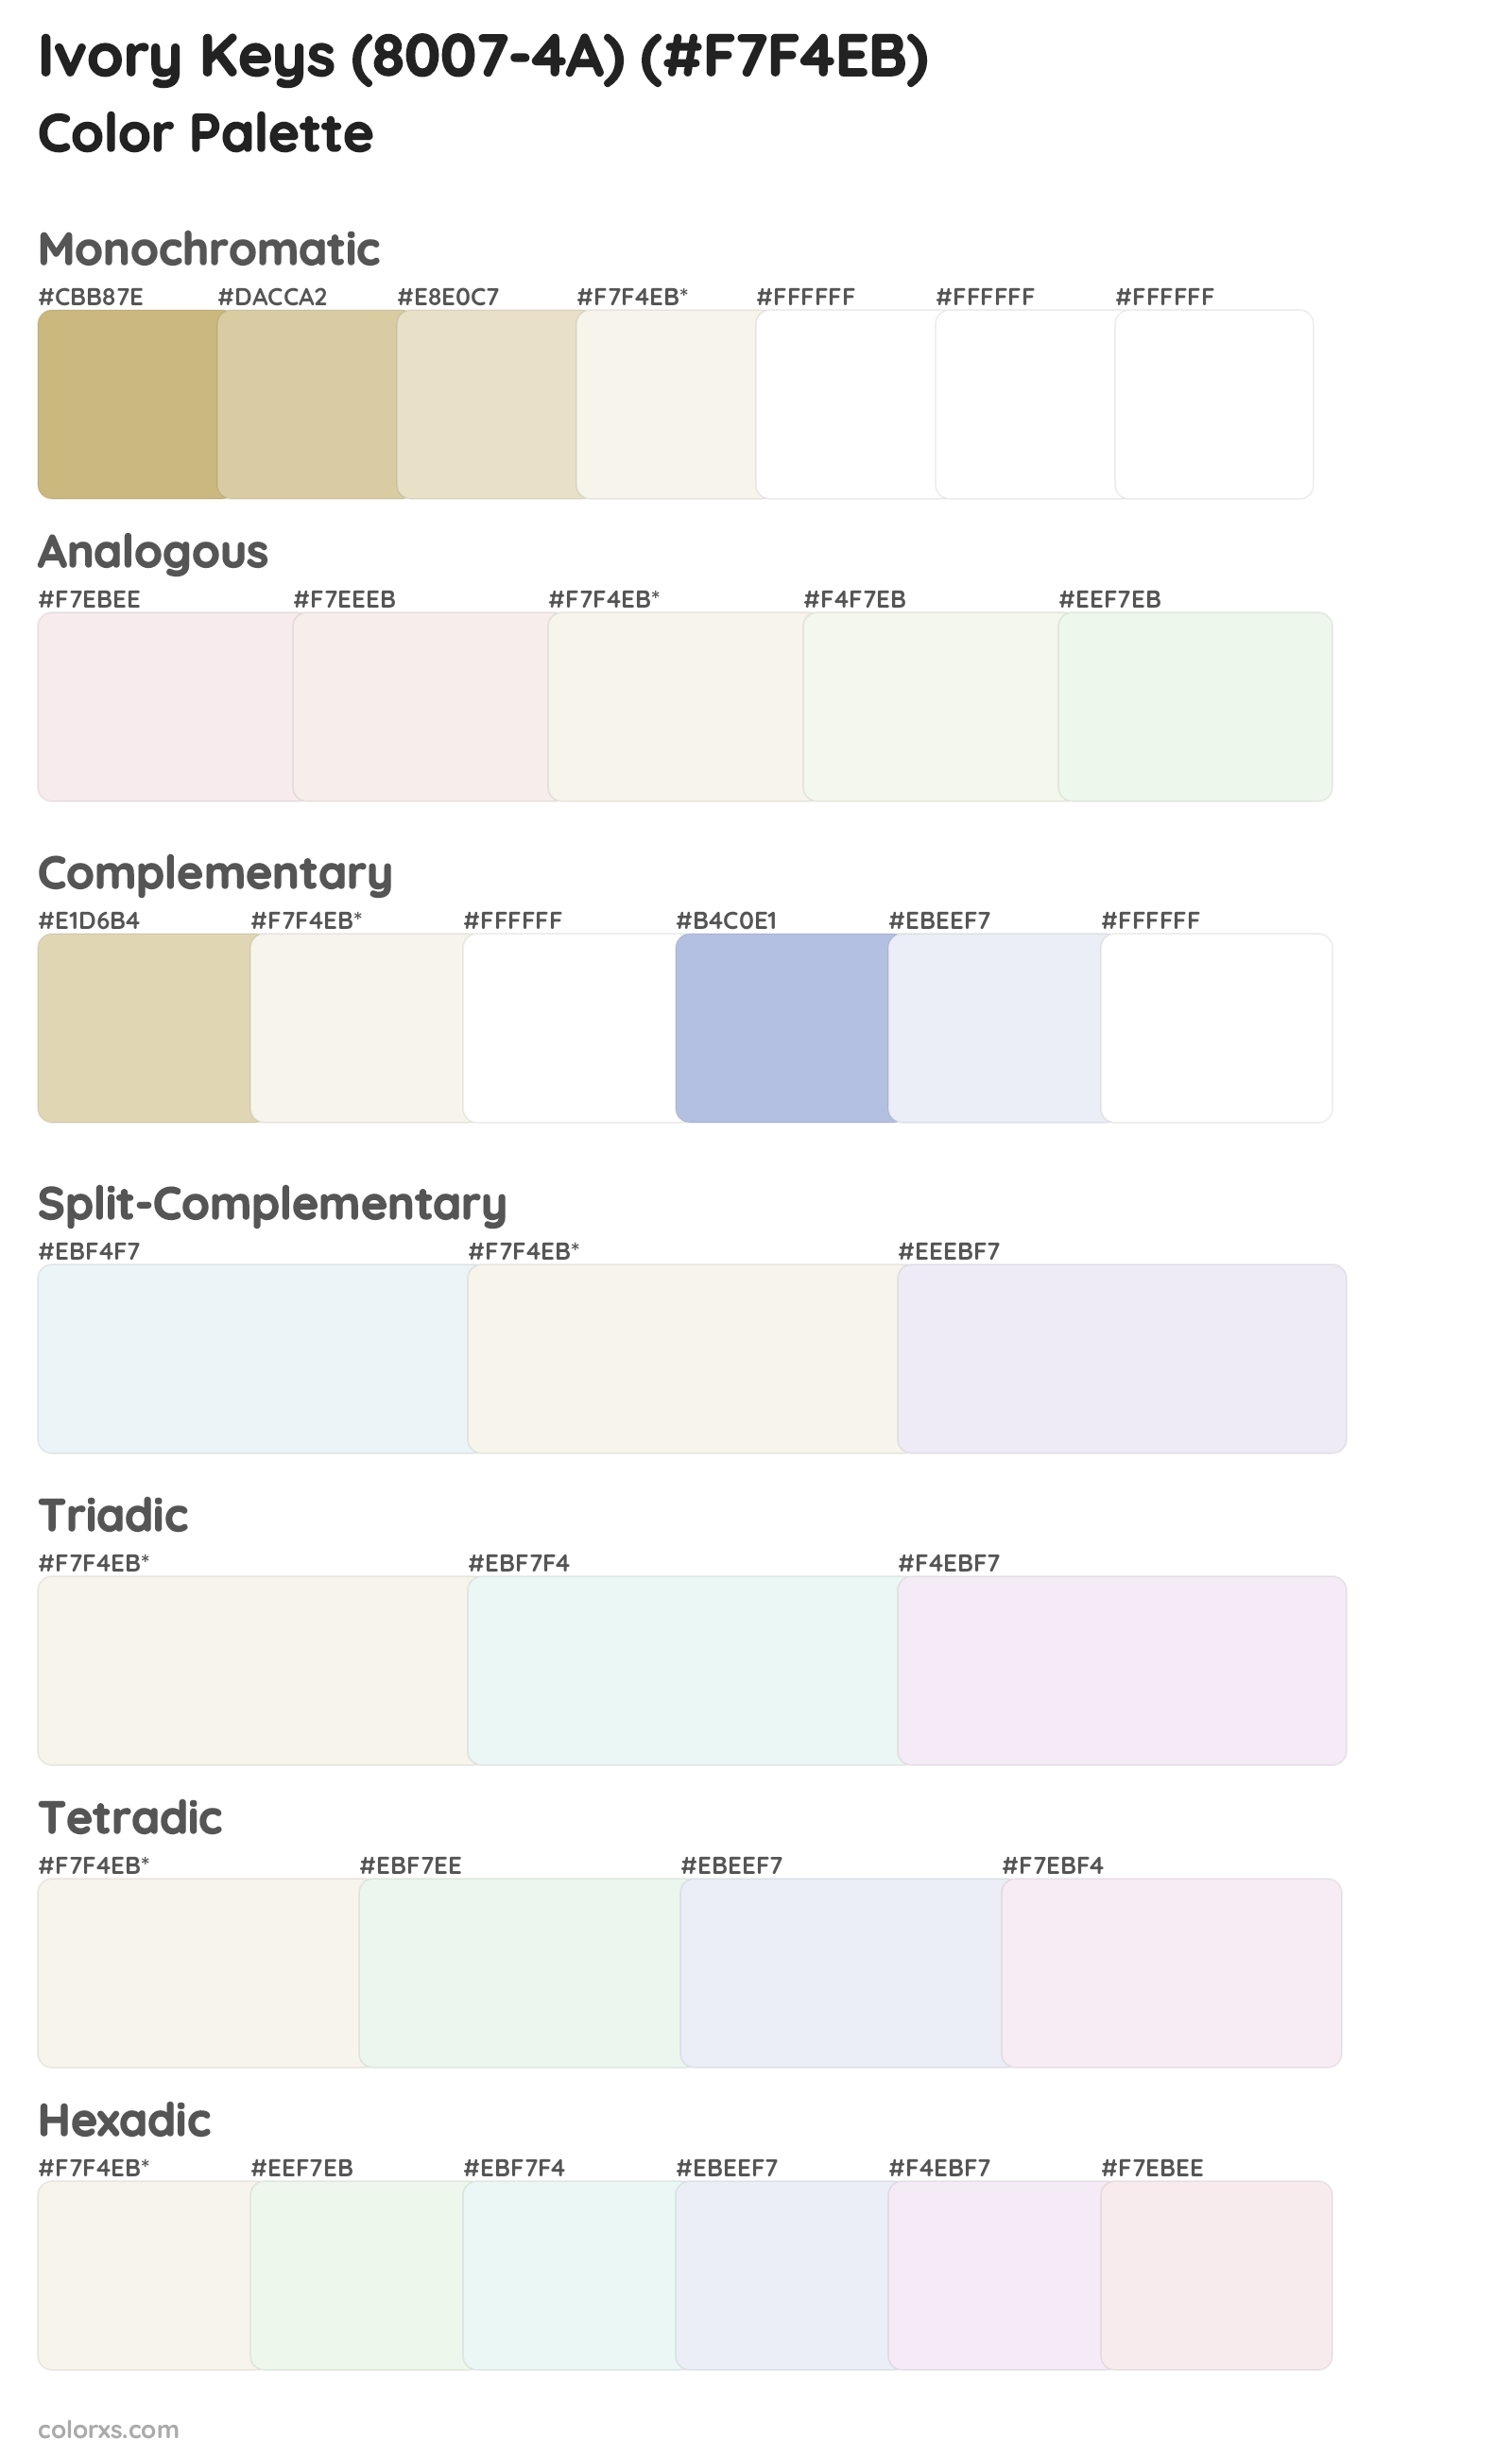 Ivory Keys (8007-4A) Color Scheme Palettes